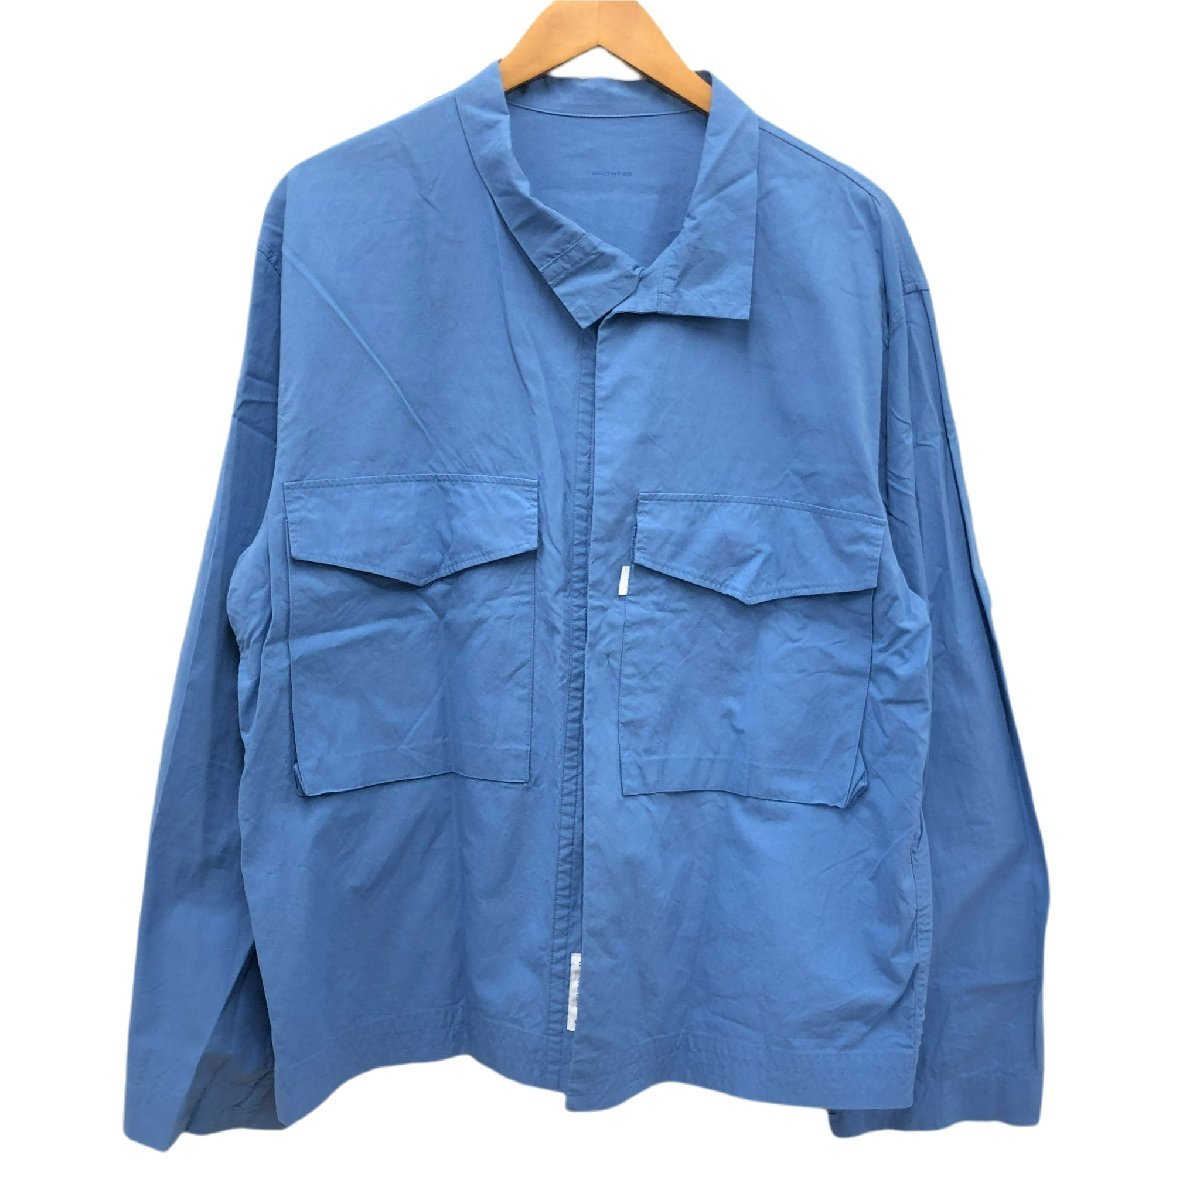 S H - Shirt Jacket エスエイチ - 比翼 スタンドカラーシャツ コットンジャケット ブルー L @K